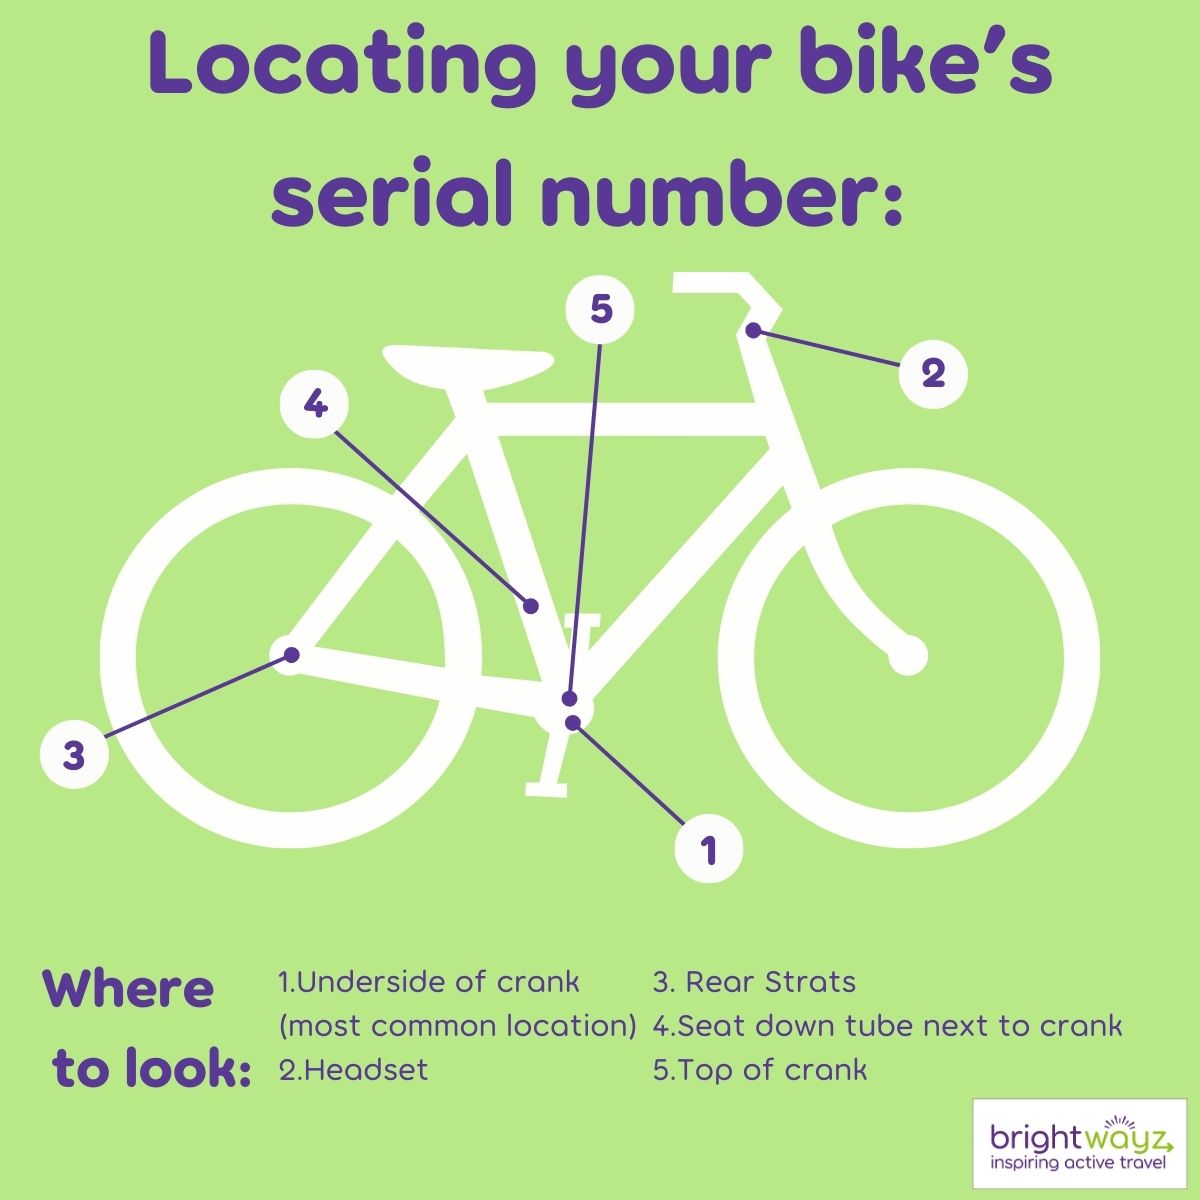 Bike information sheet